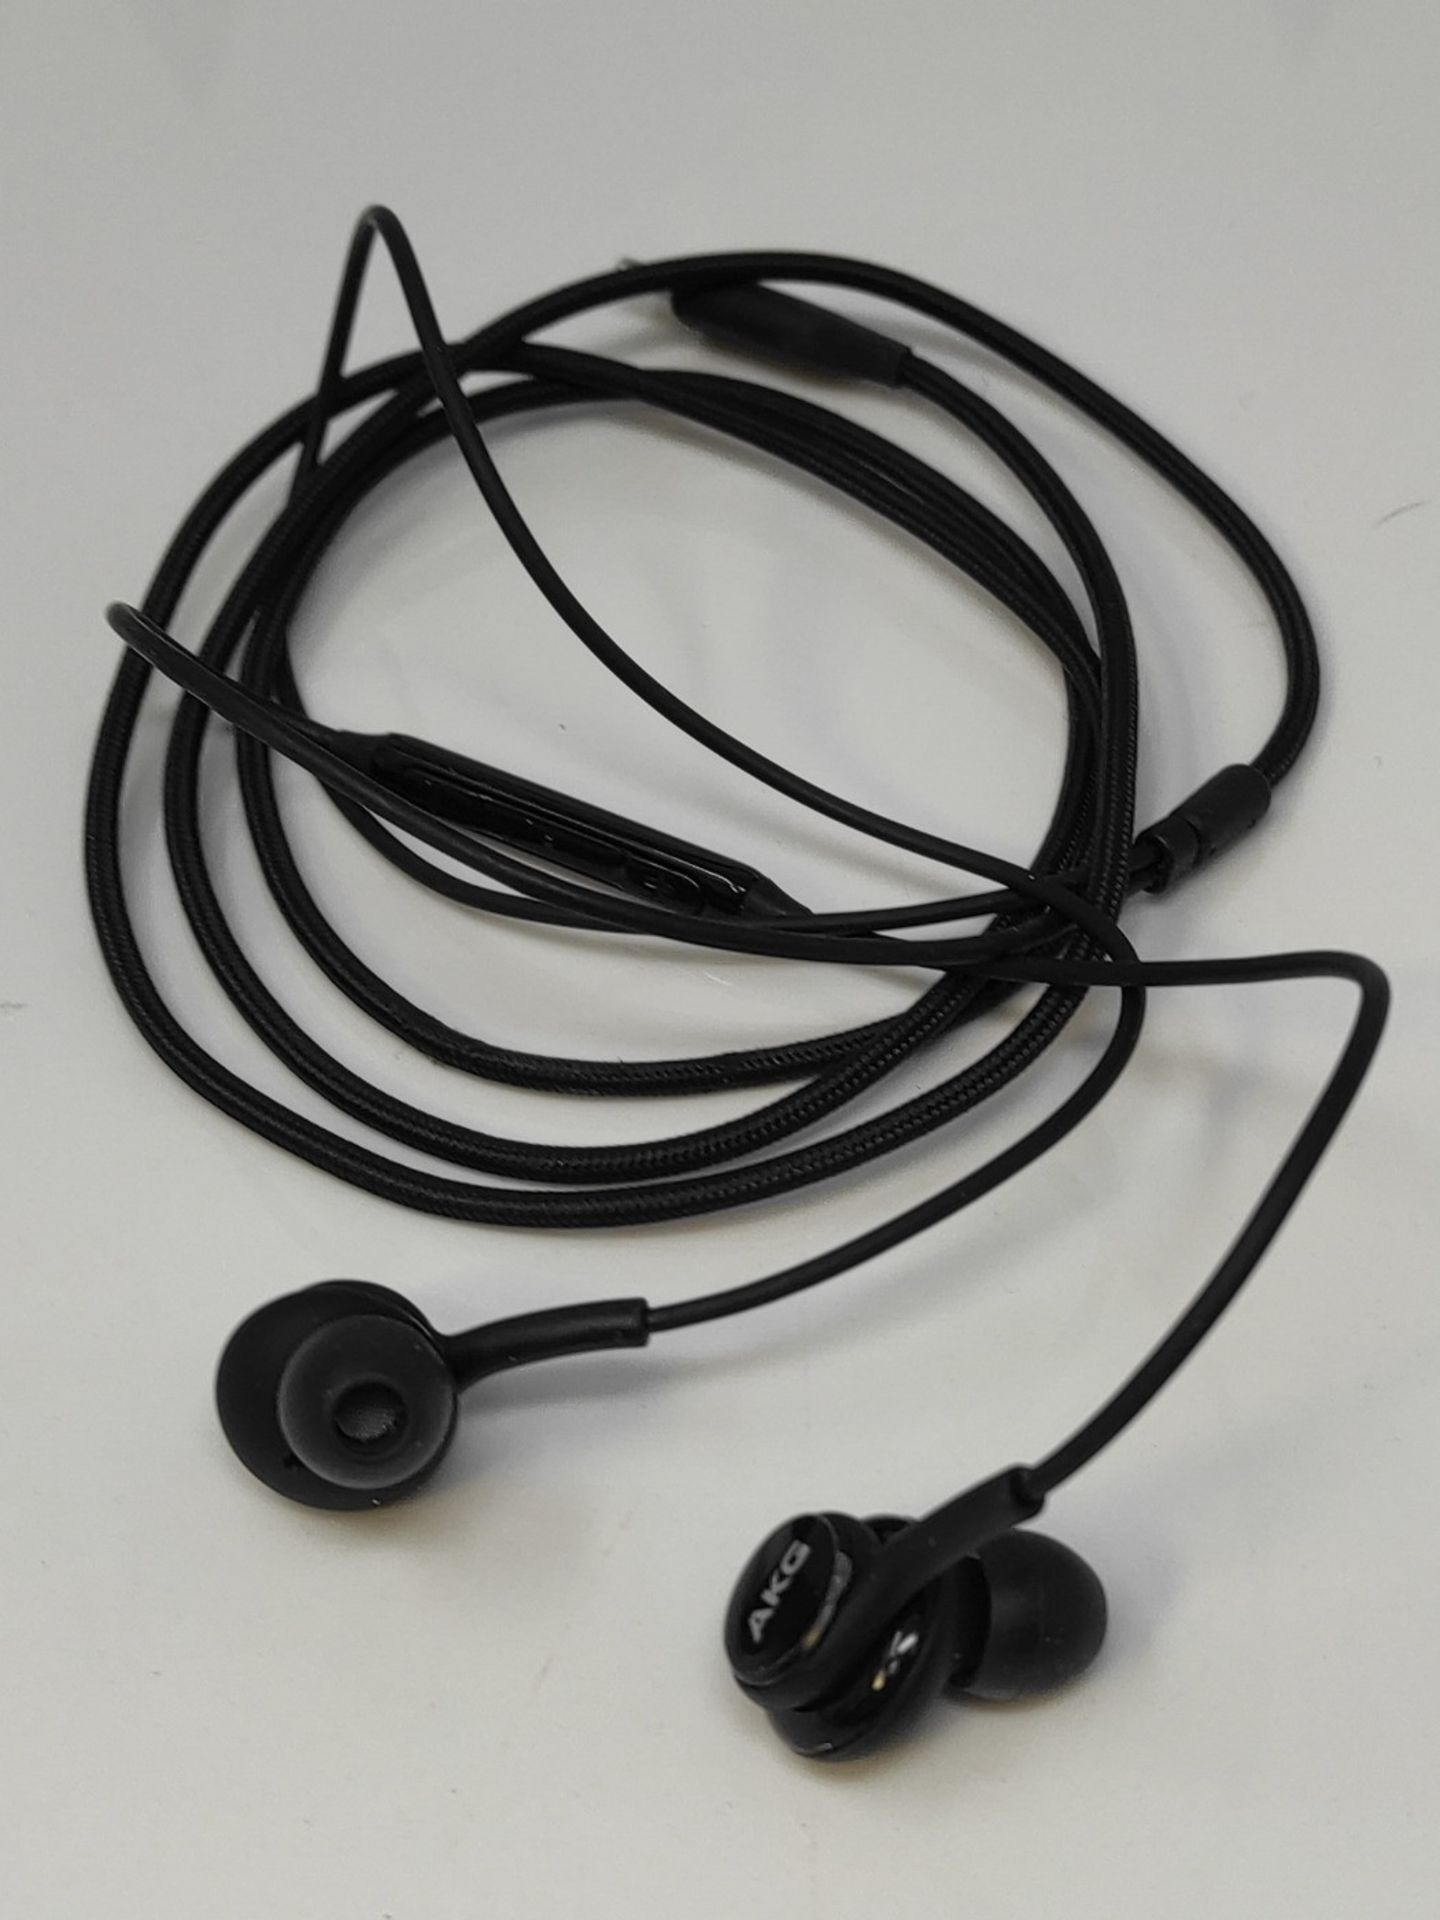 Samsung USB Type-C Earphones EO-IC100, Sound by AKG, black. - Image 2 of 2